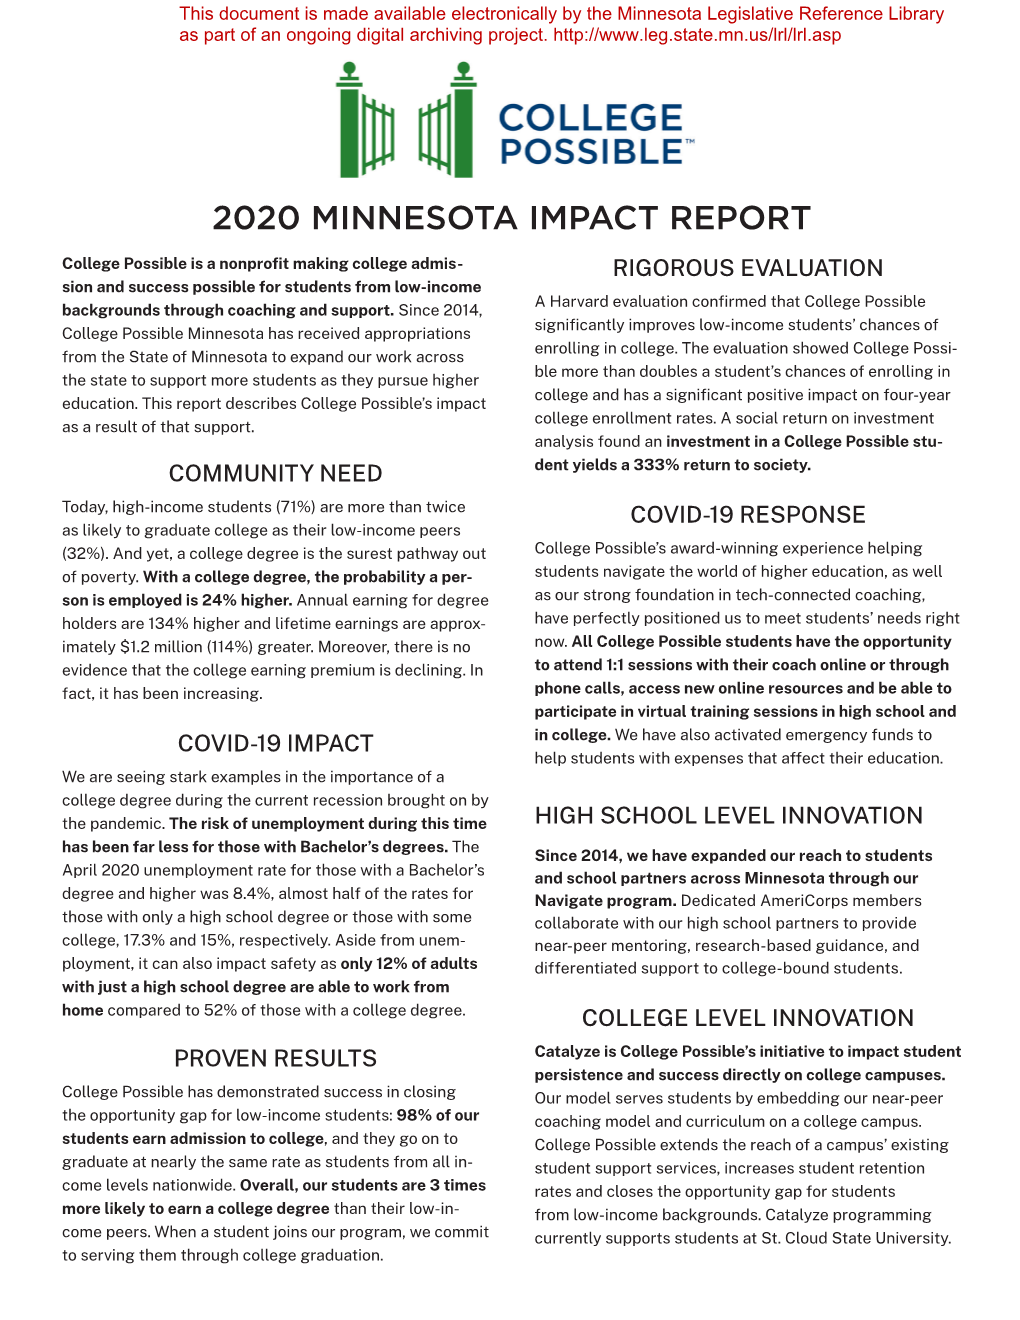 2020 Minnesota Impact Report